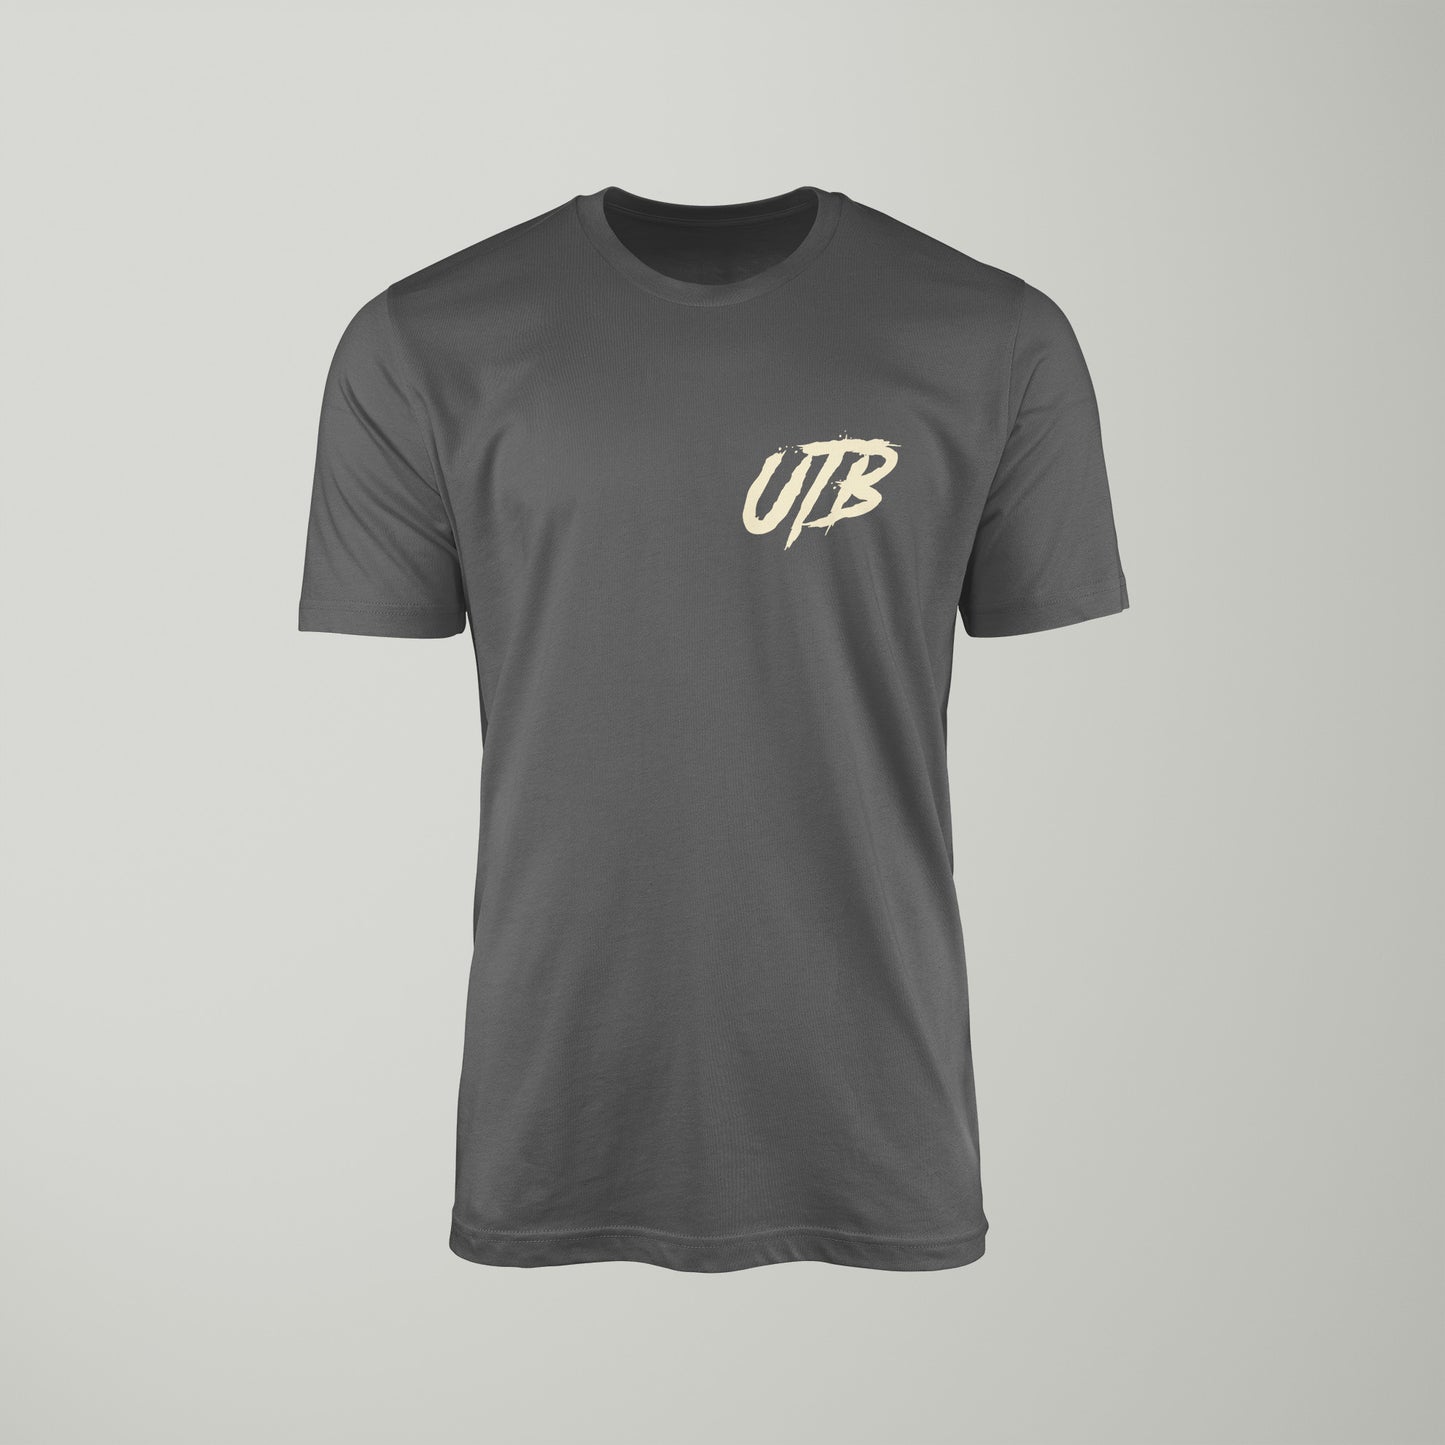 UTB Premium T-Shirt